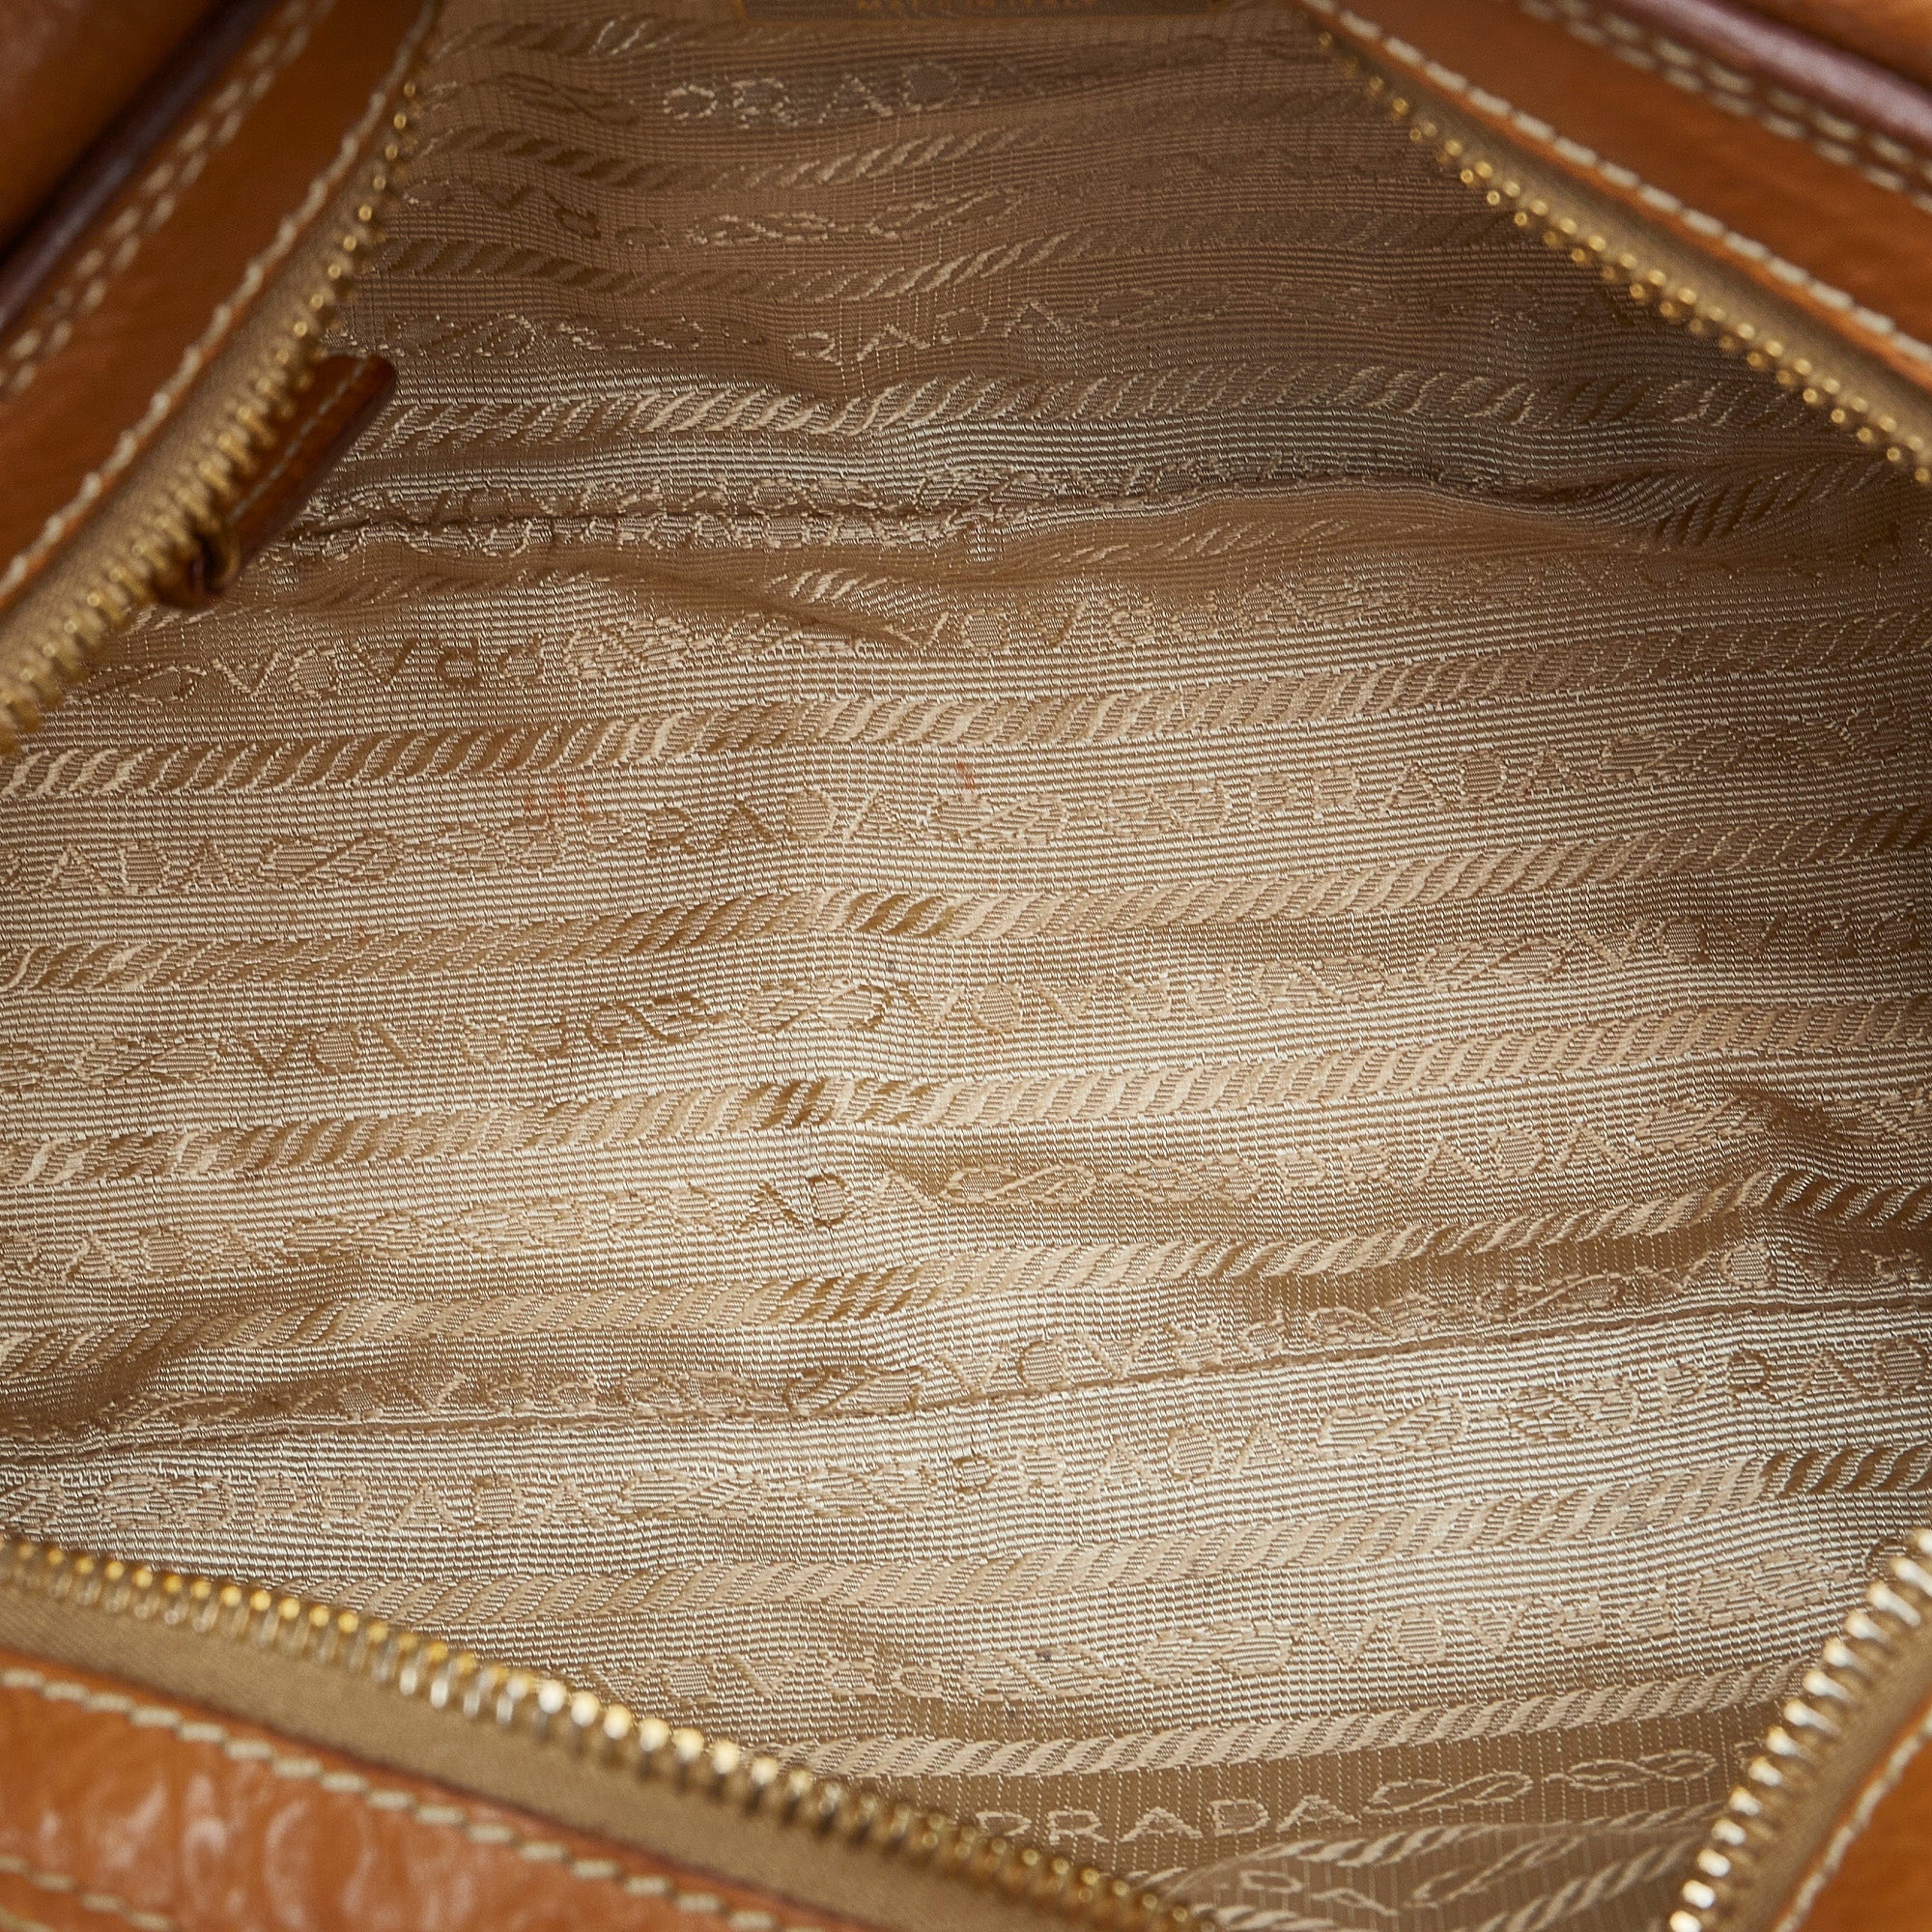 Brown Prada Leather Shoulder Bag